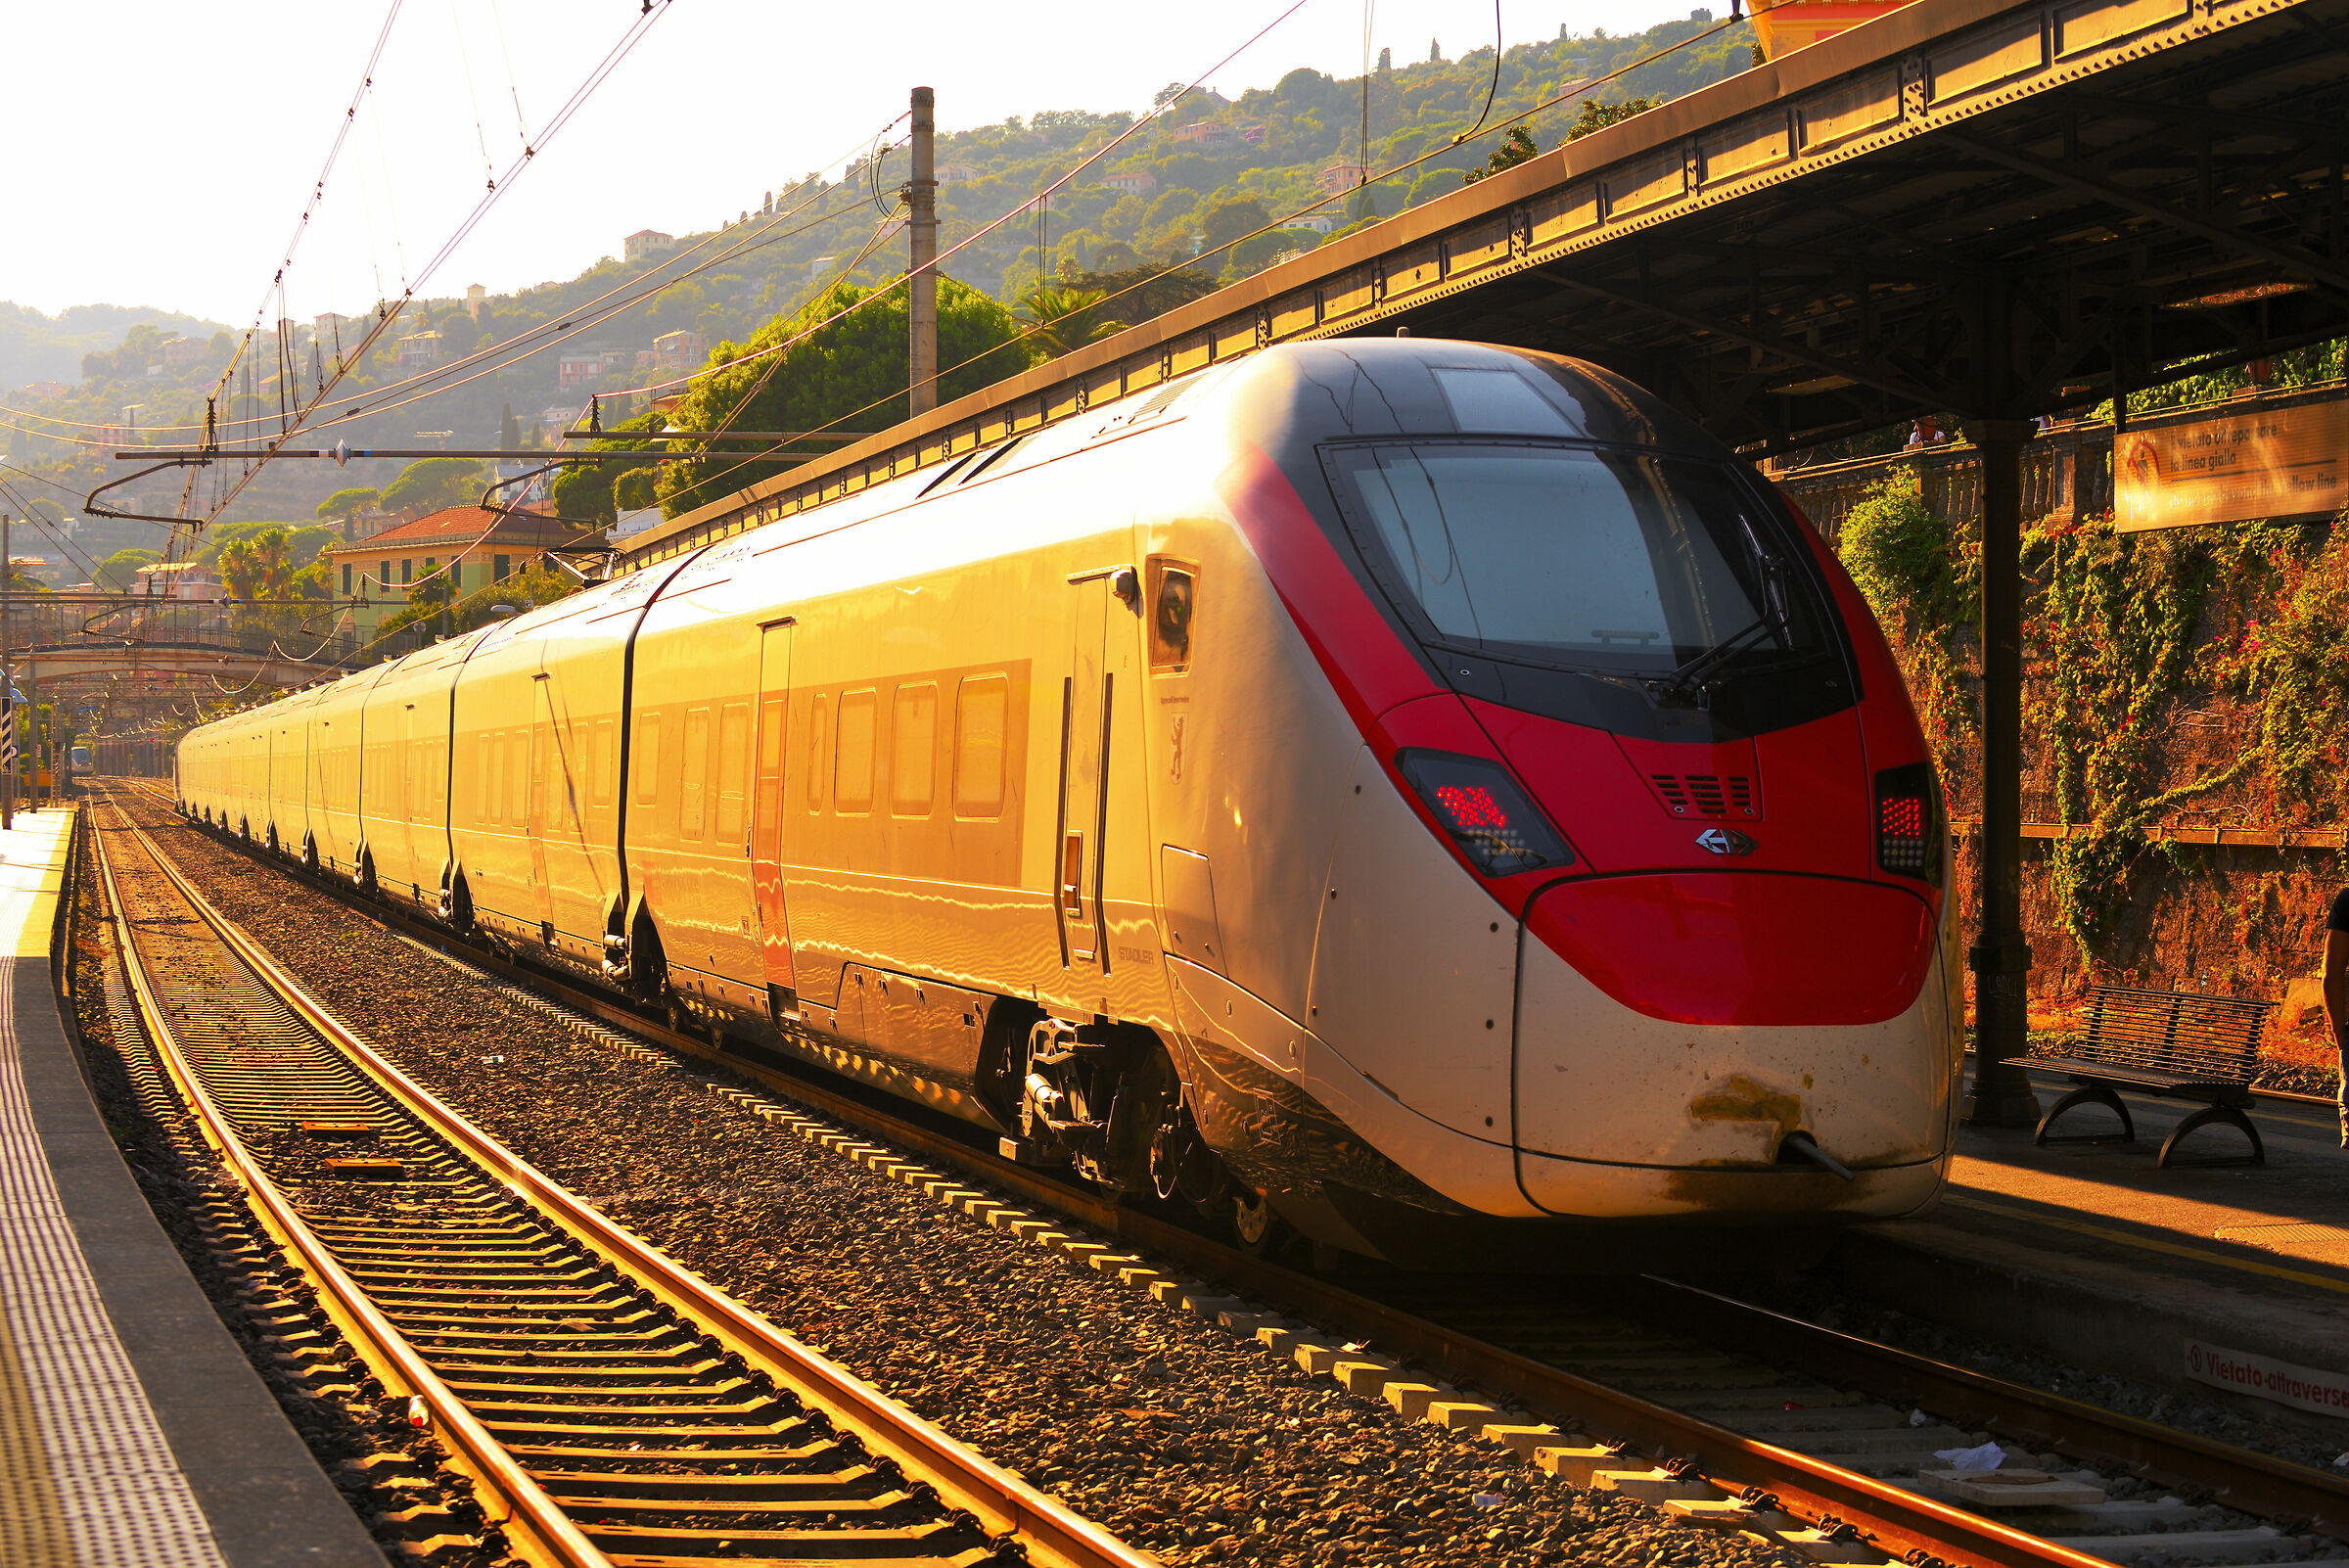 Swiss train in Liguria ...